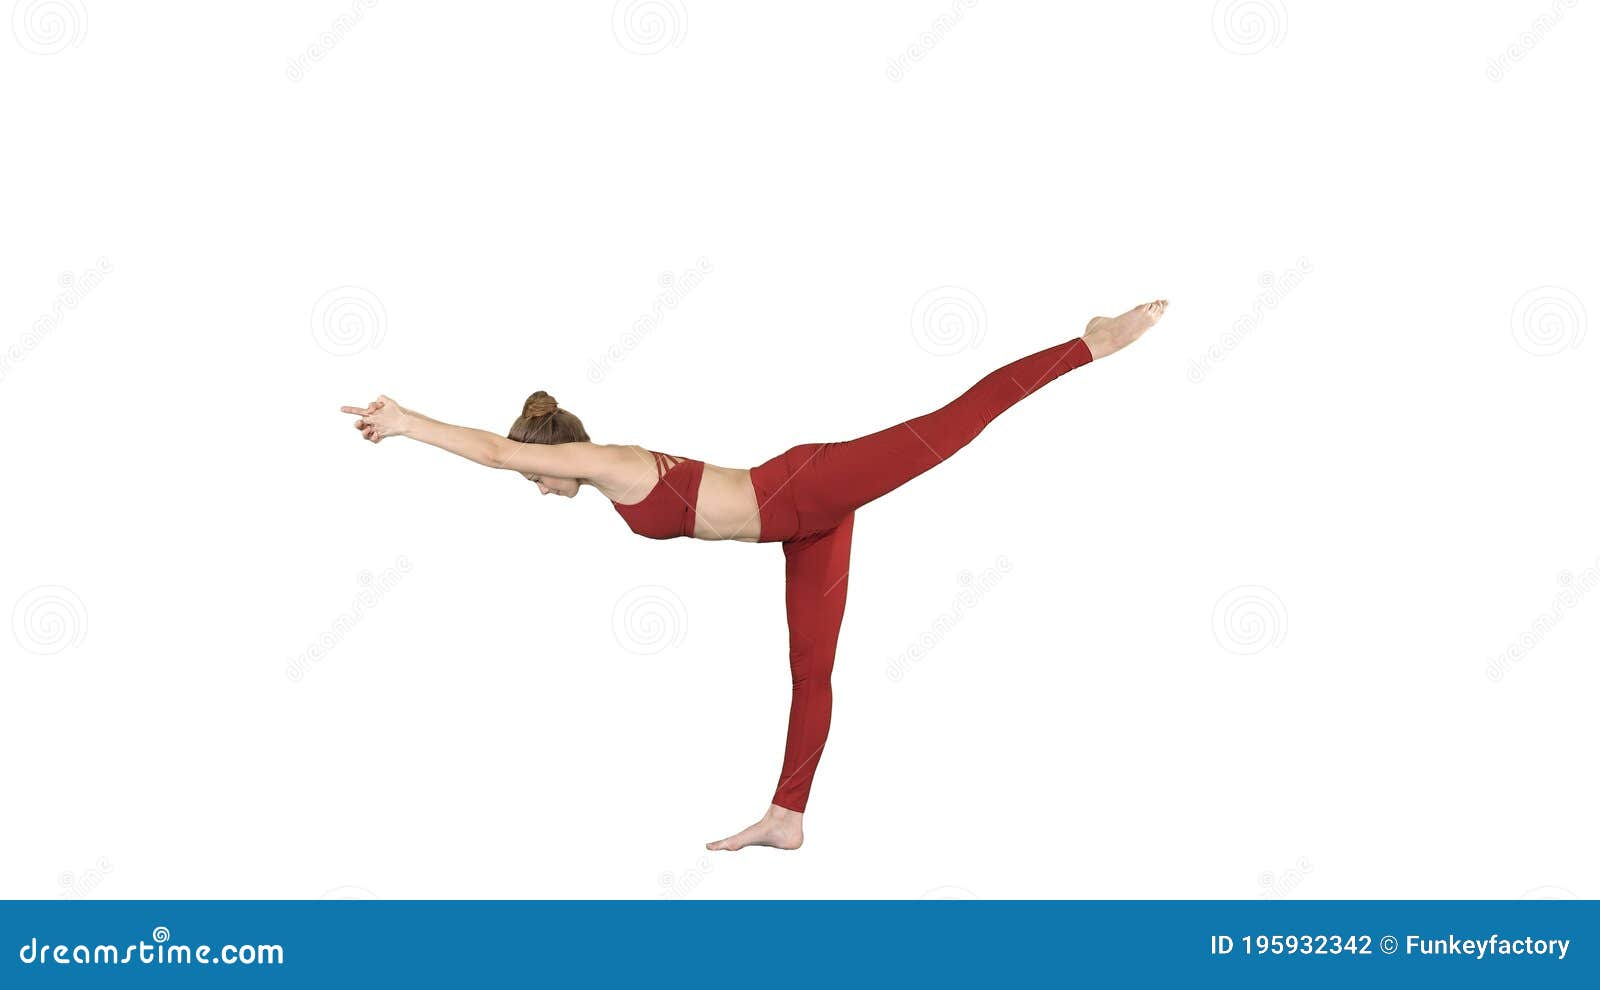 Tuladandasana or Balancing Stick Pose is an advanced yoga posture